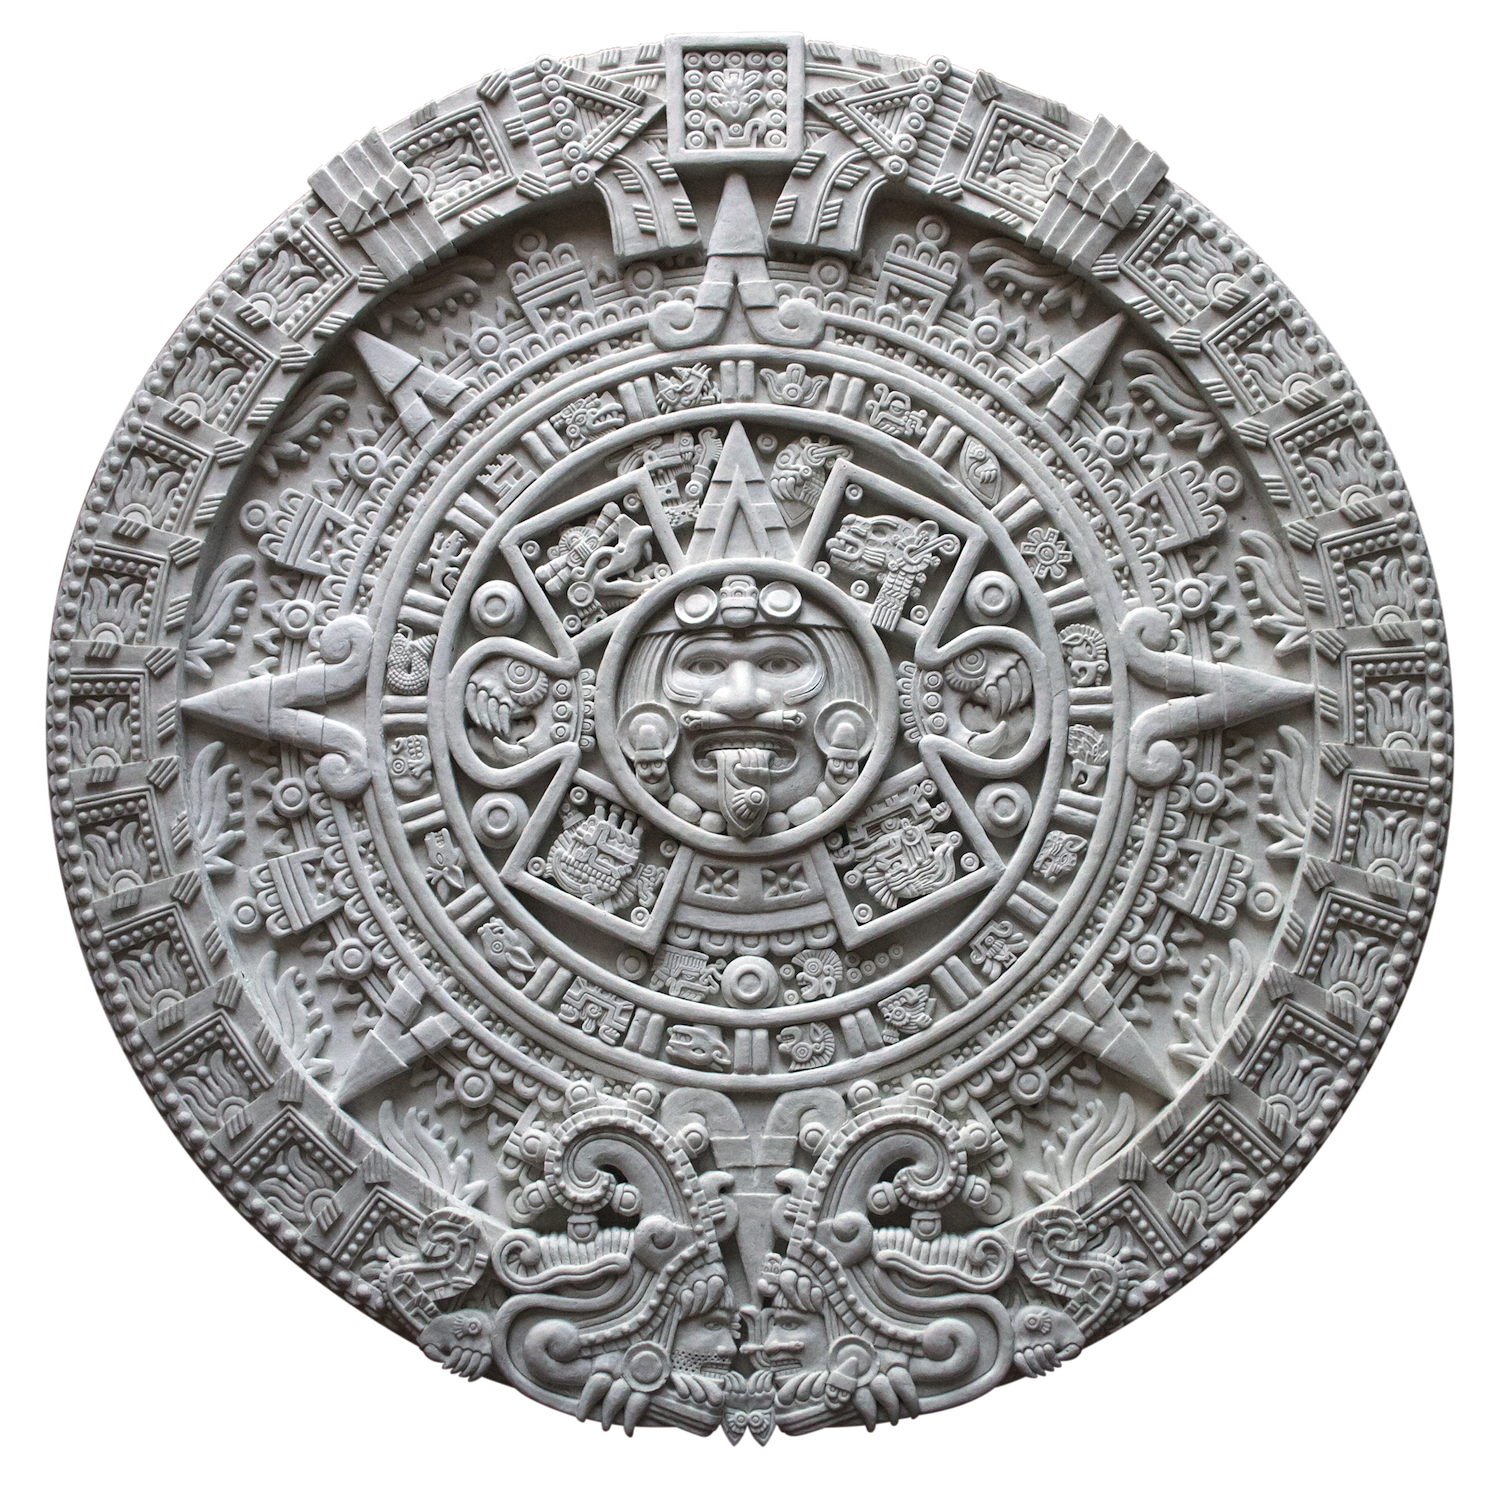 Mesoamerican Chronology Wikipedia